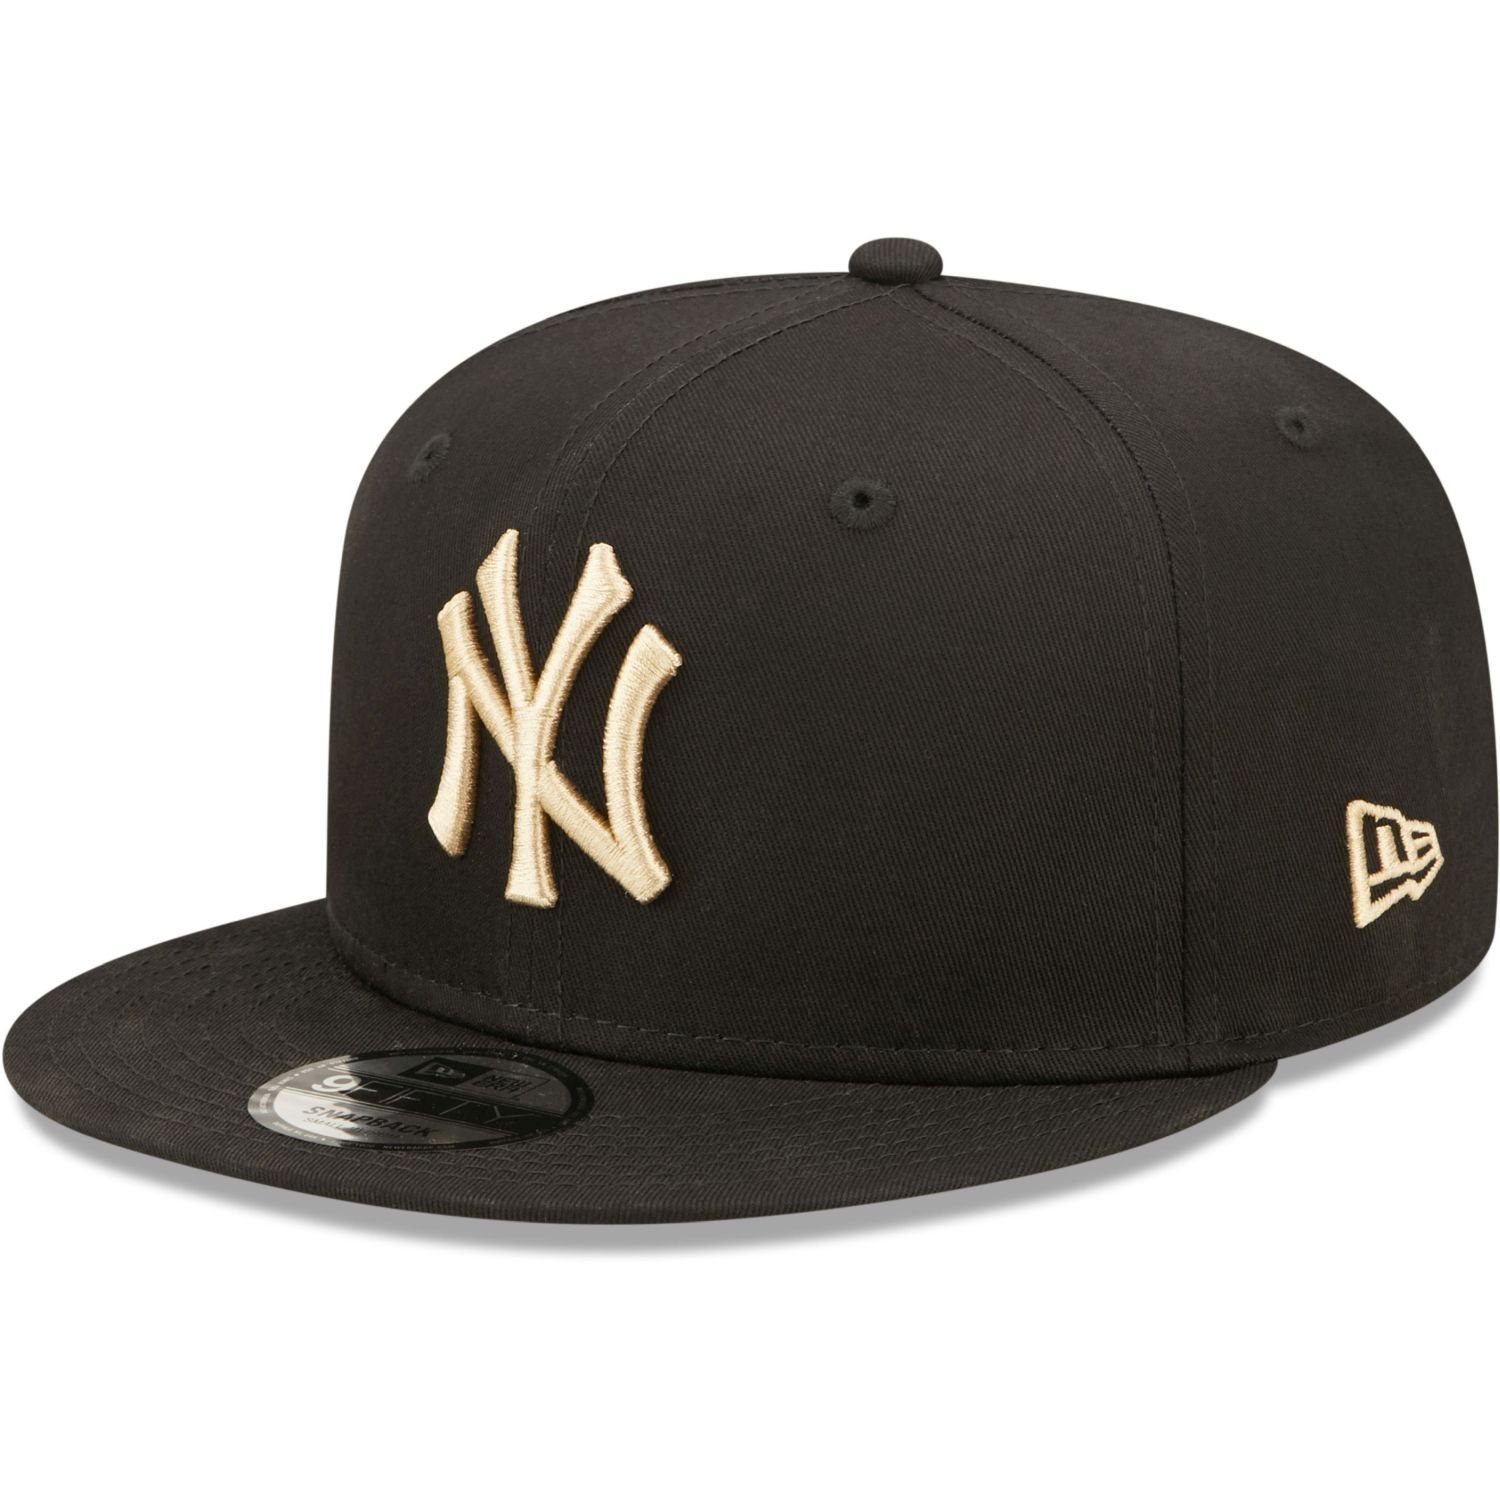 New Era Snapback Cap 9Fifty York Yankees New schwarz